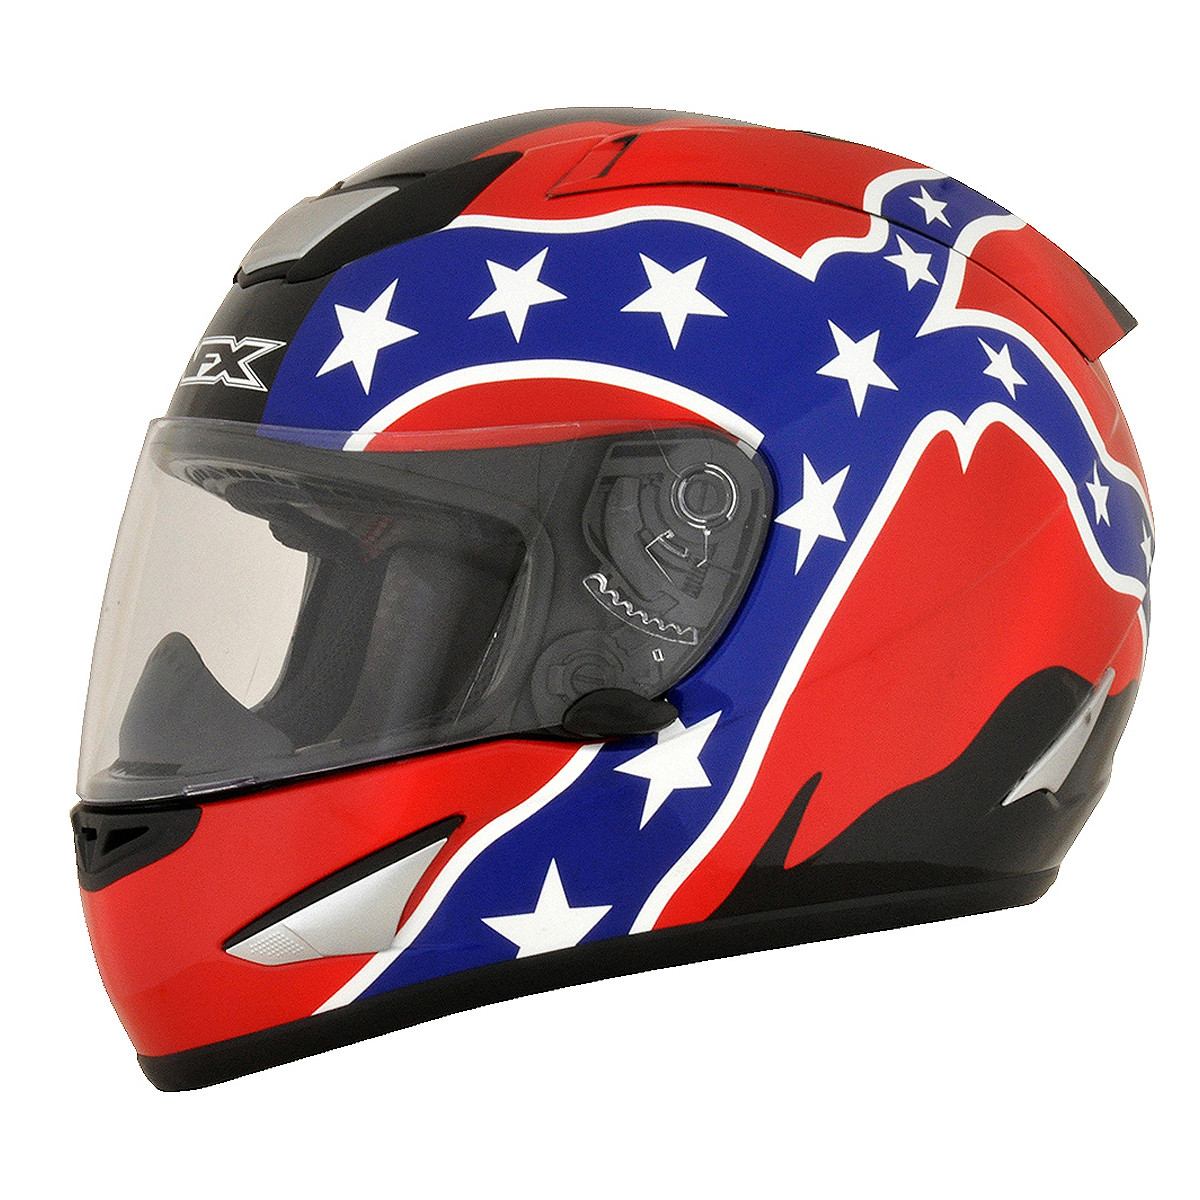 Confederate Flag Motorcycle Helmets | Reviewmotors.co